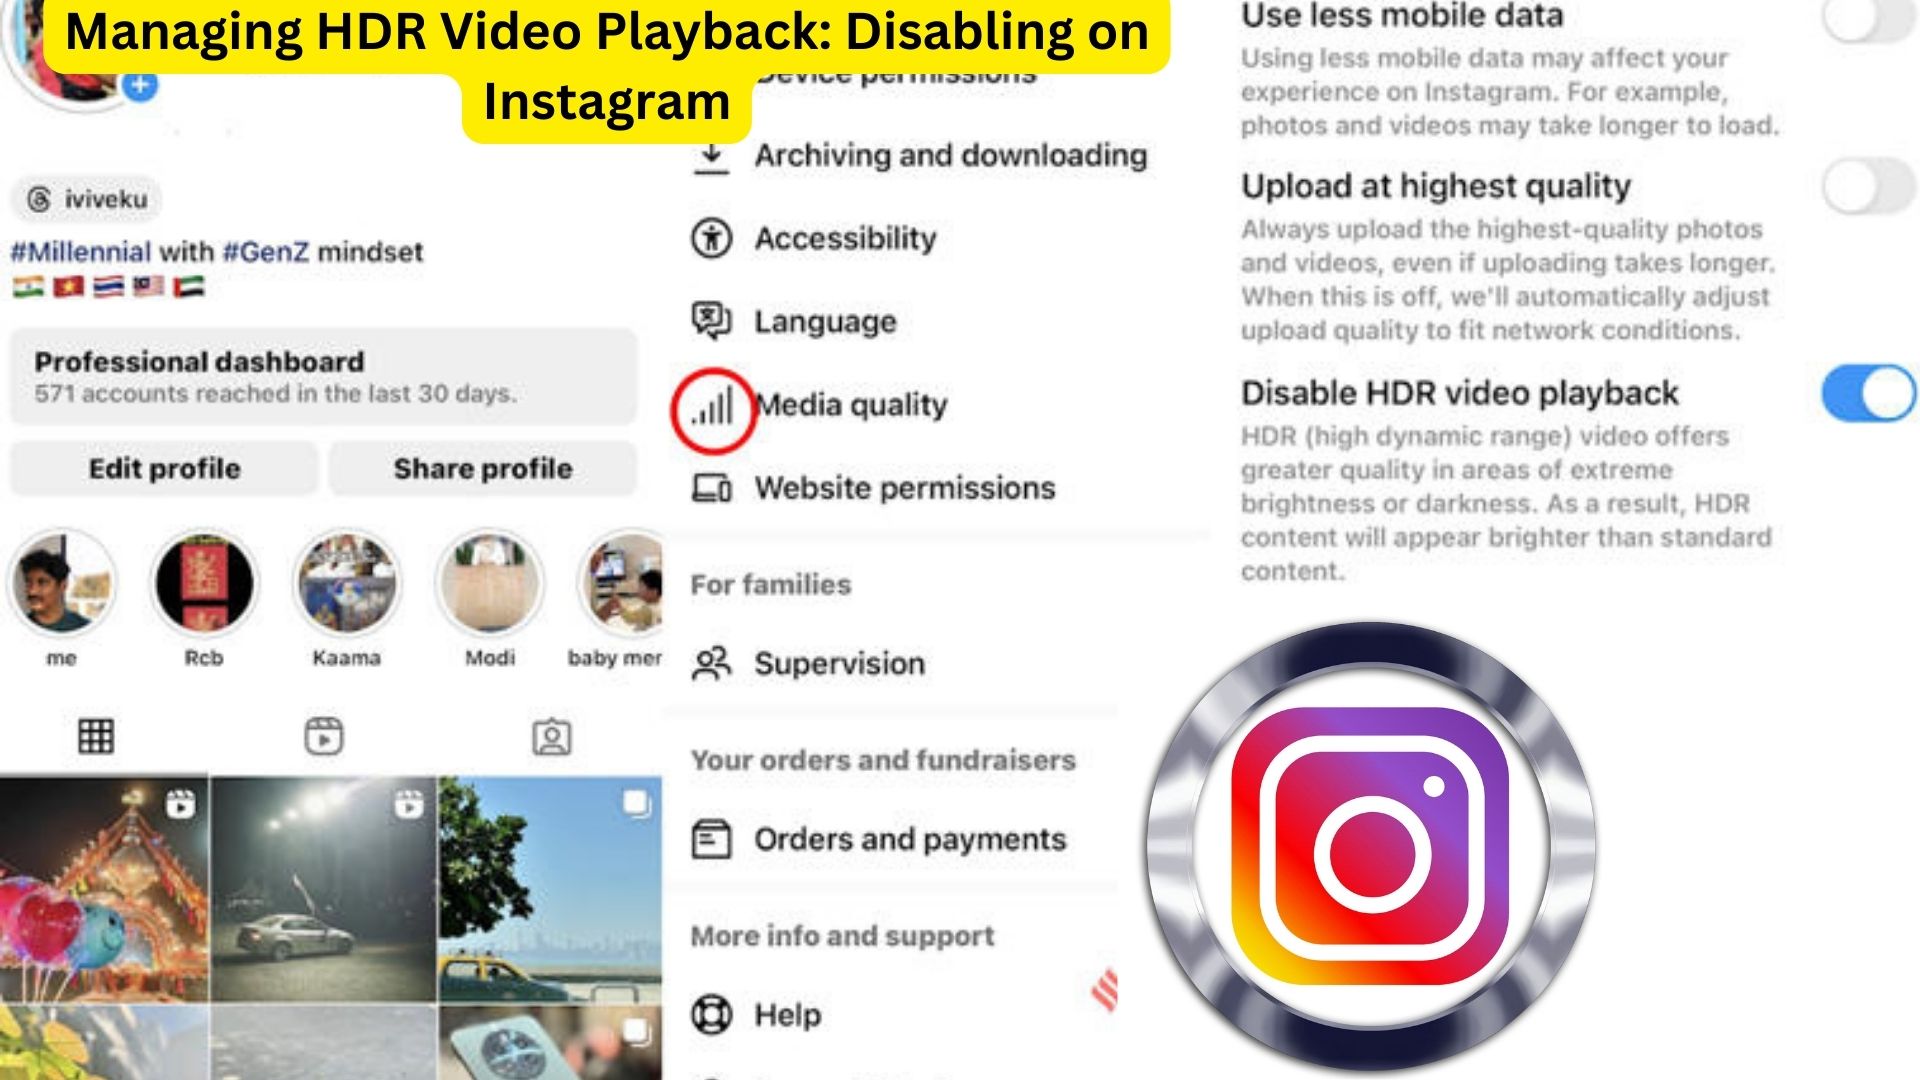 Managing HDR Video Playback: Disabling on Instagram